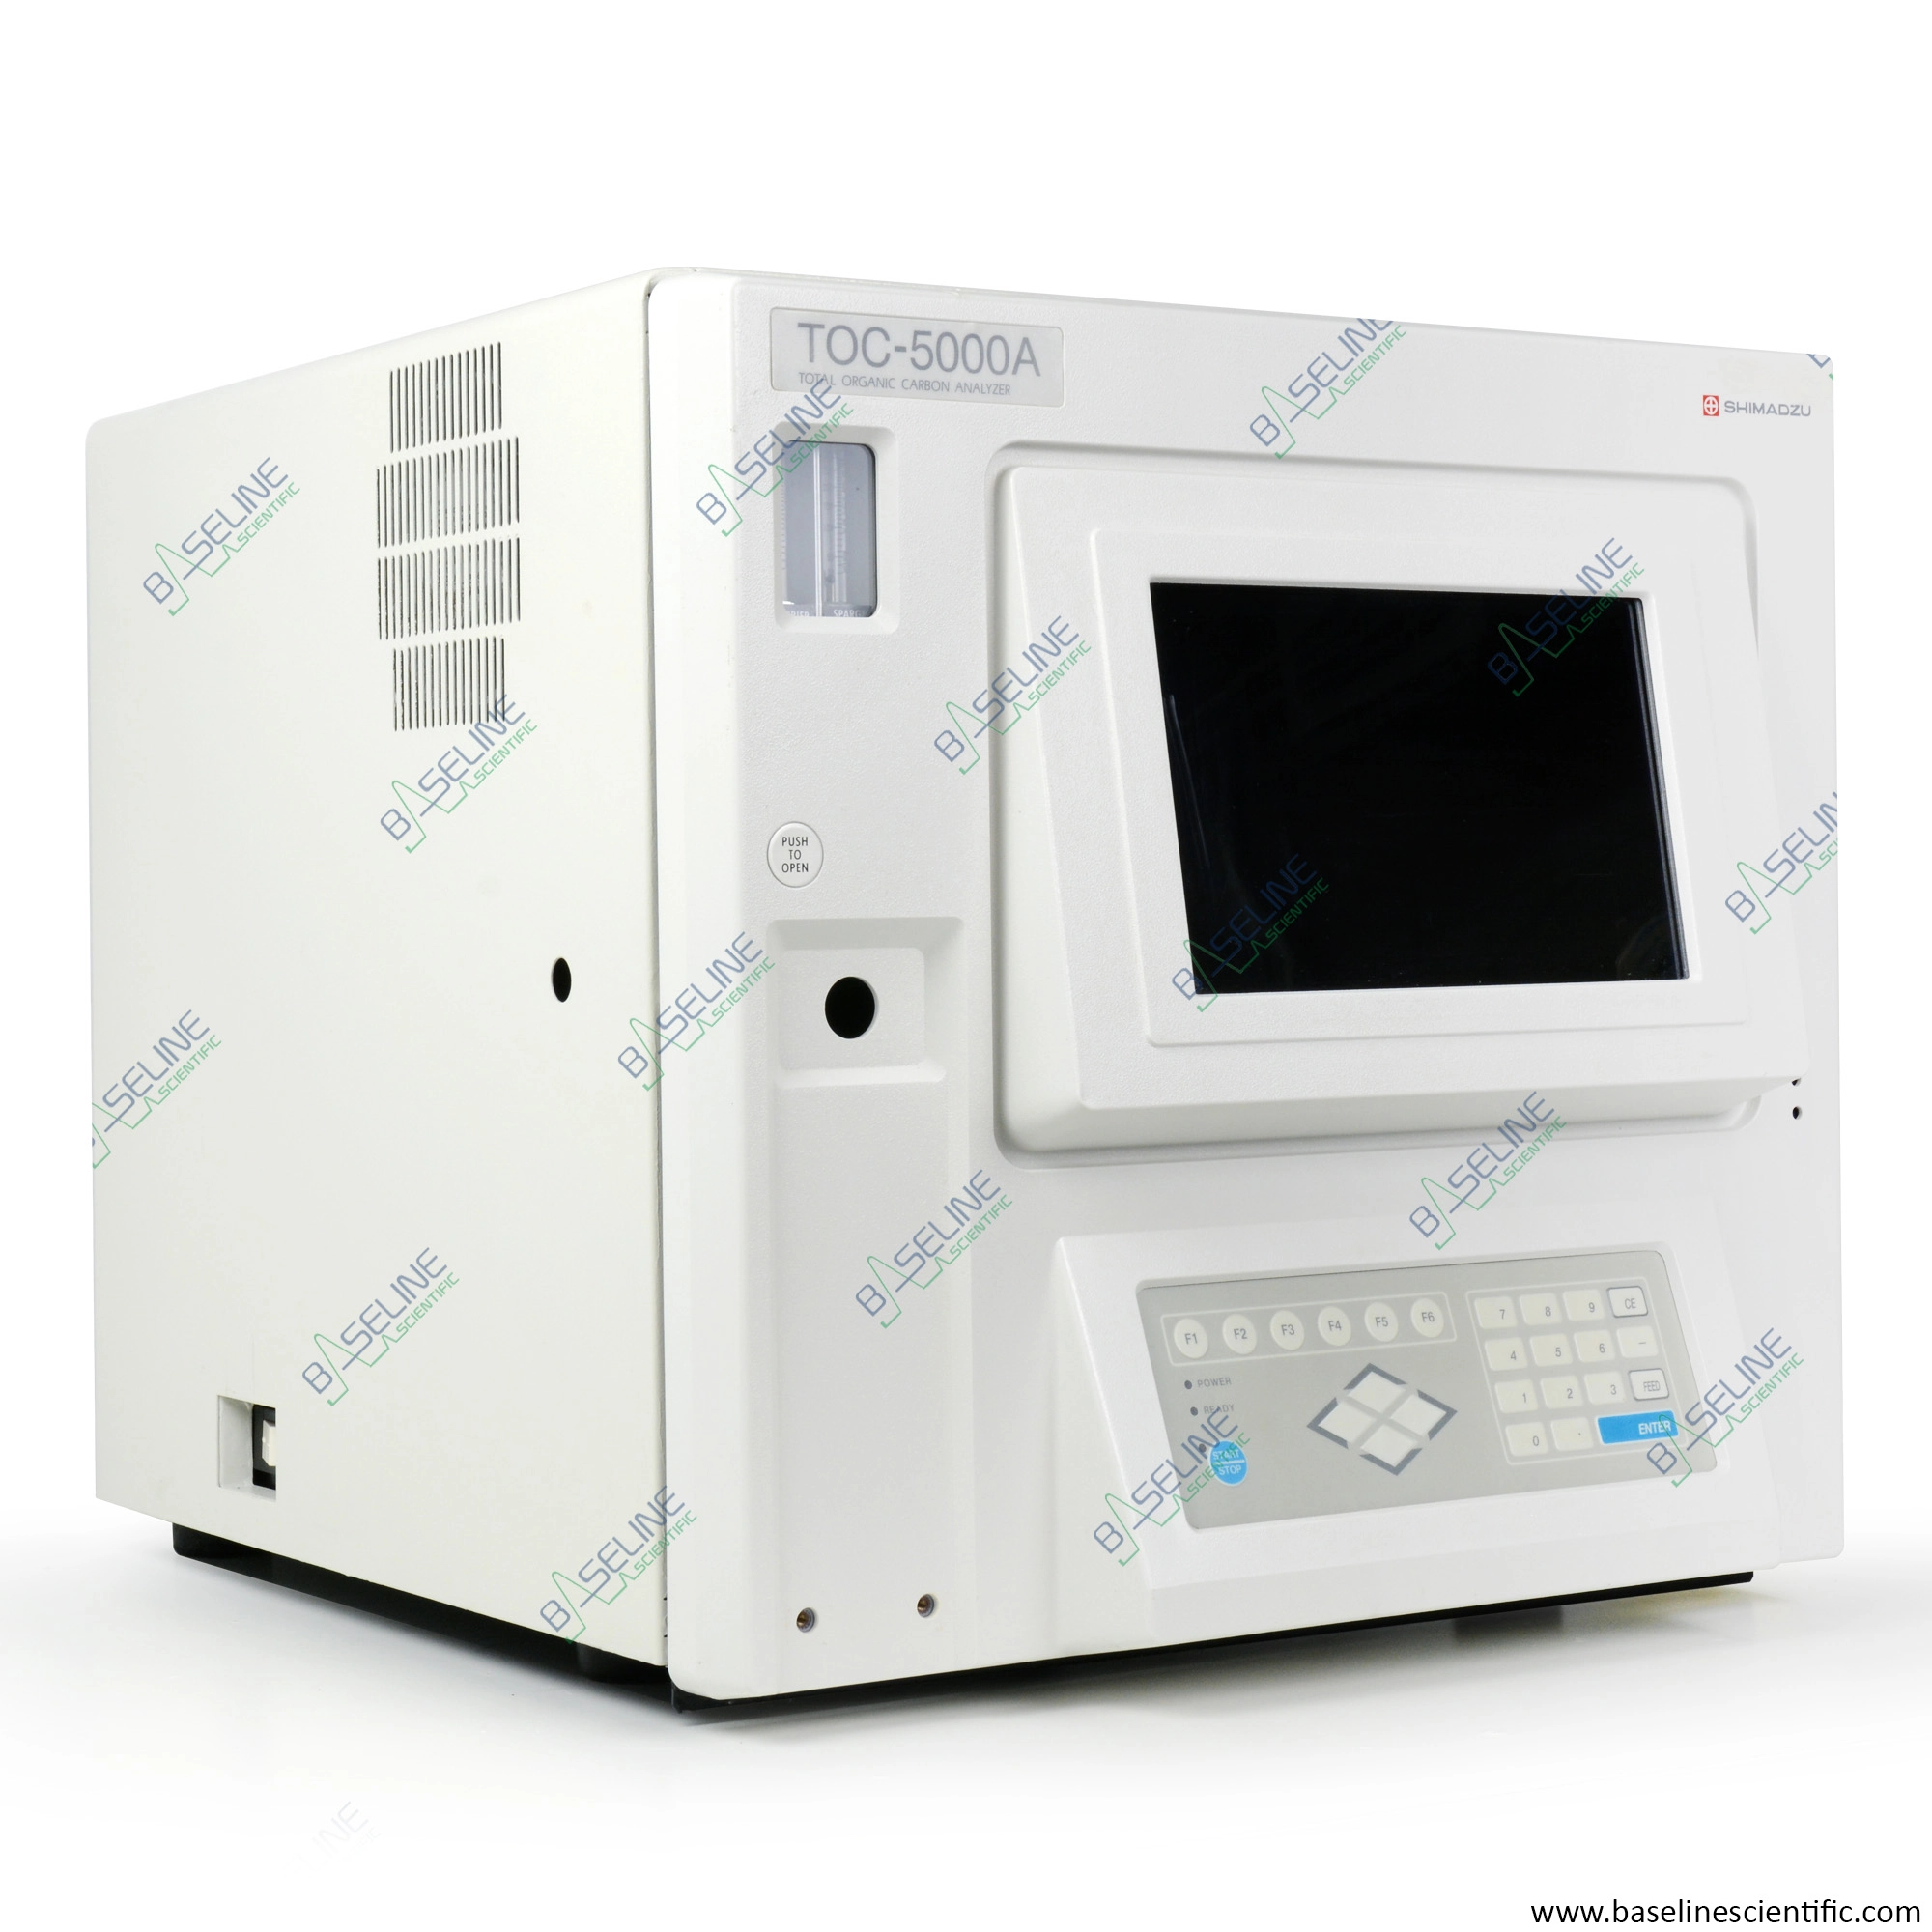 Shimadzu TOC-5000A Total Carbon Analyzer